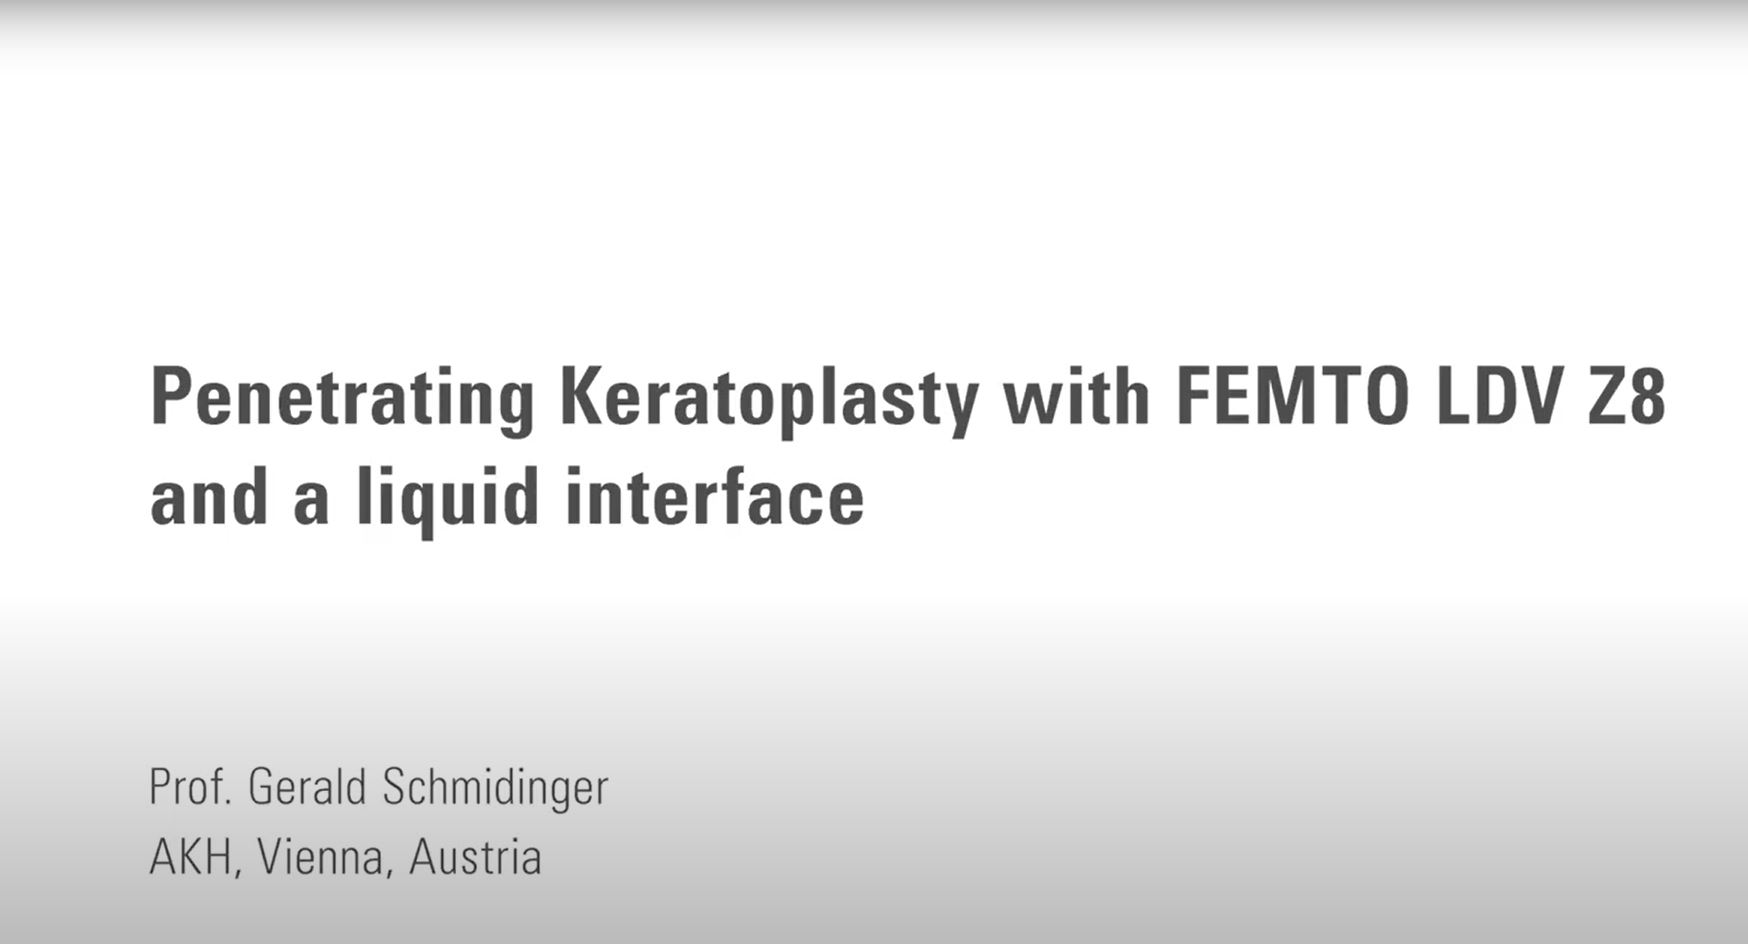 Prof. Gerald Schmidinger (AKH Vienna, Austria) performs "liquid penetrating keratoplasty" with the Ziemer FEMTO LDV Z8 femtosecond laser. 